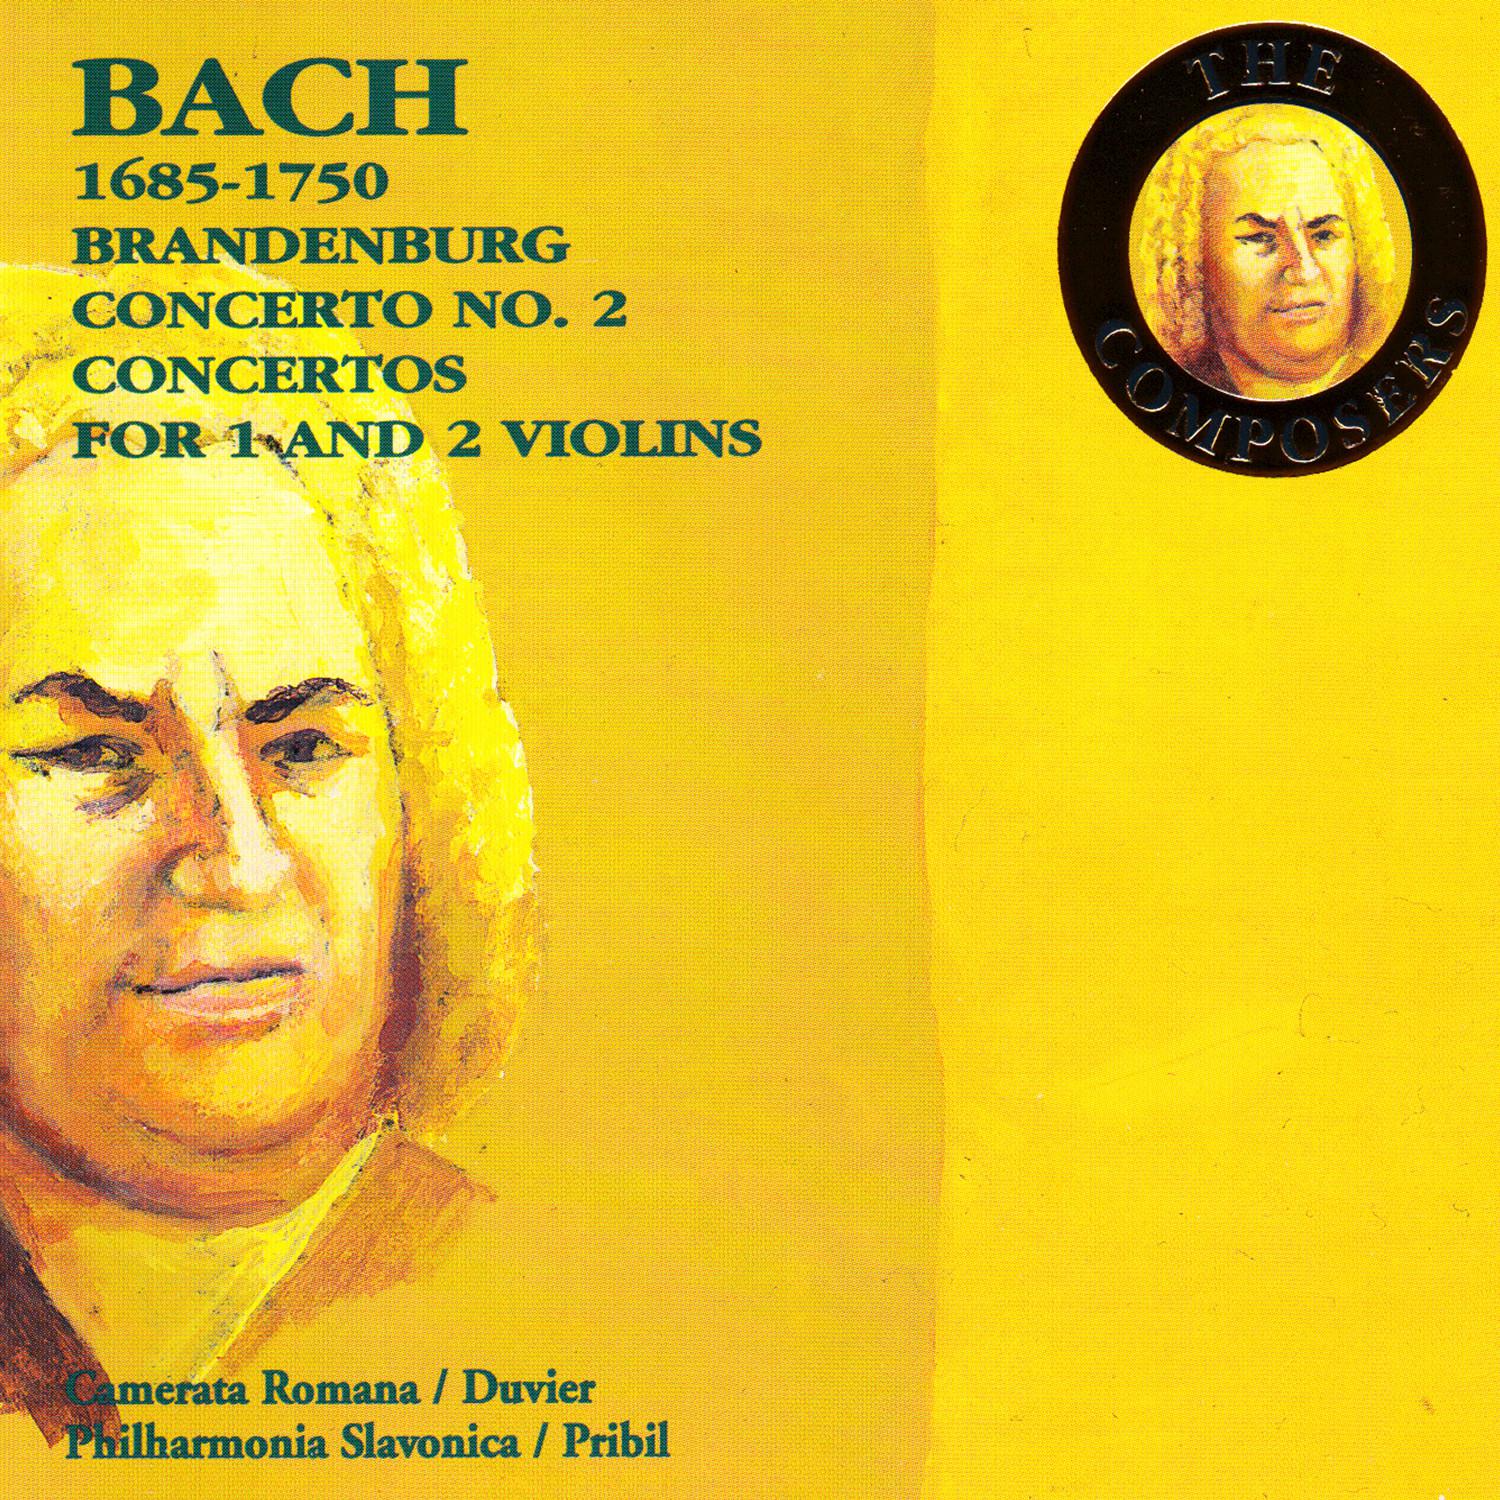 Concerto for Violin, Strings and Basso Continuo in A Minor, BWV 1041: Allegro Assai